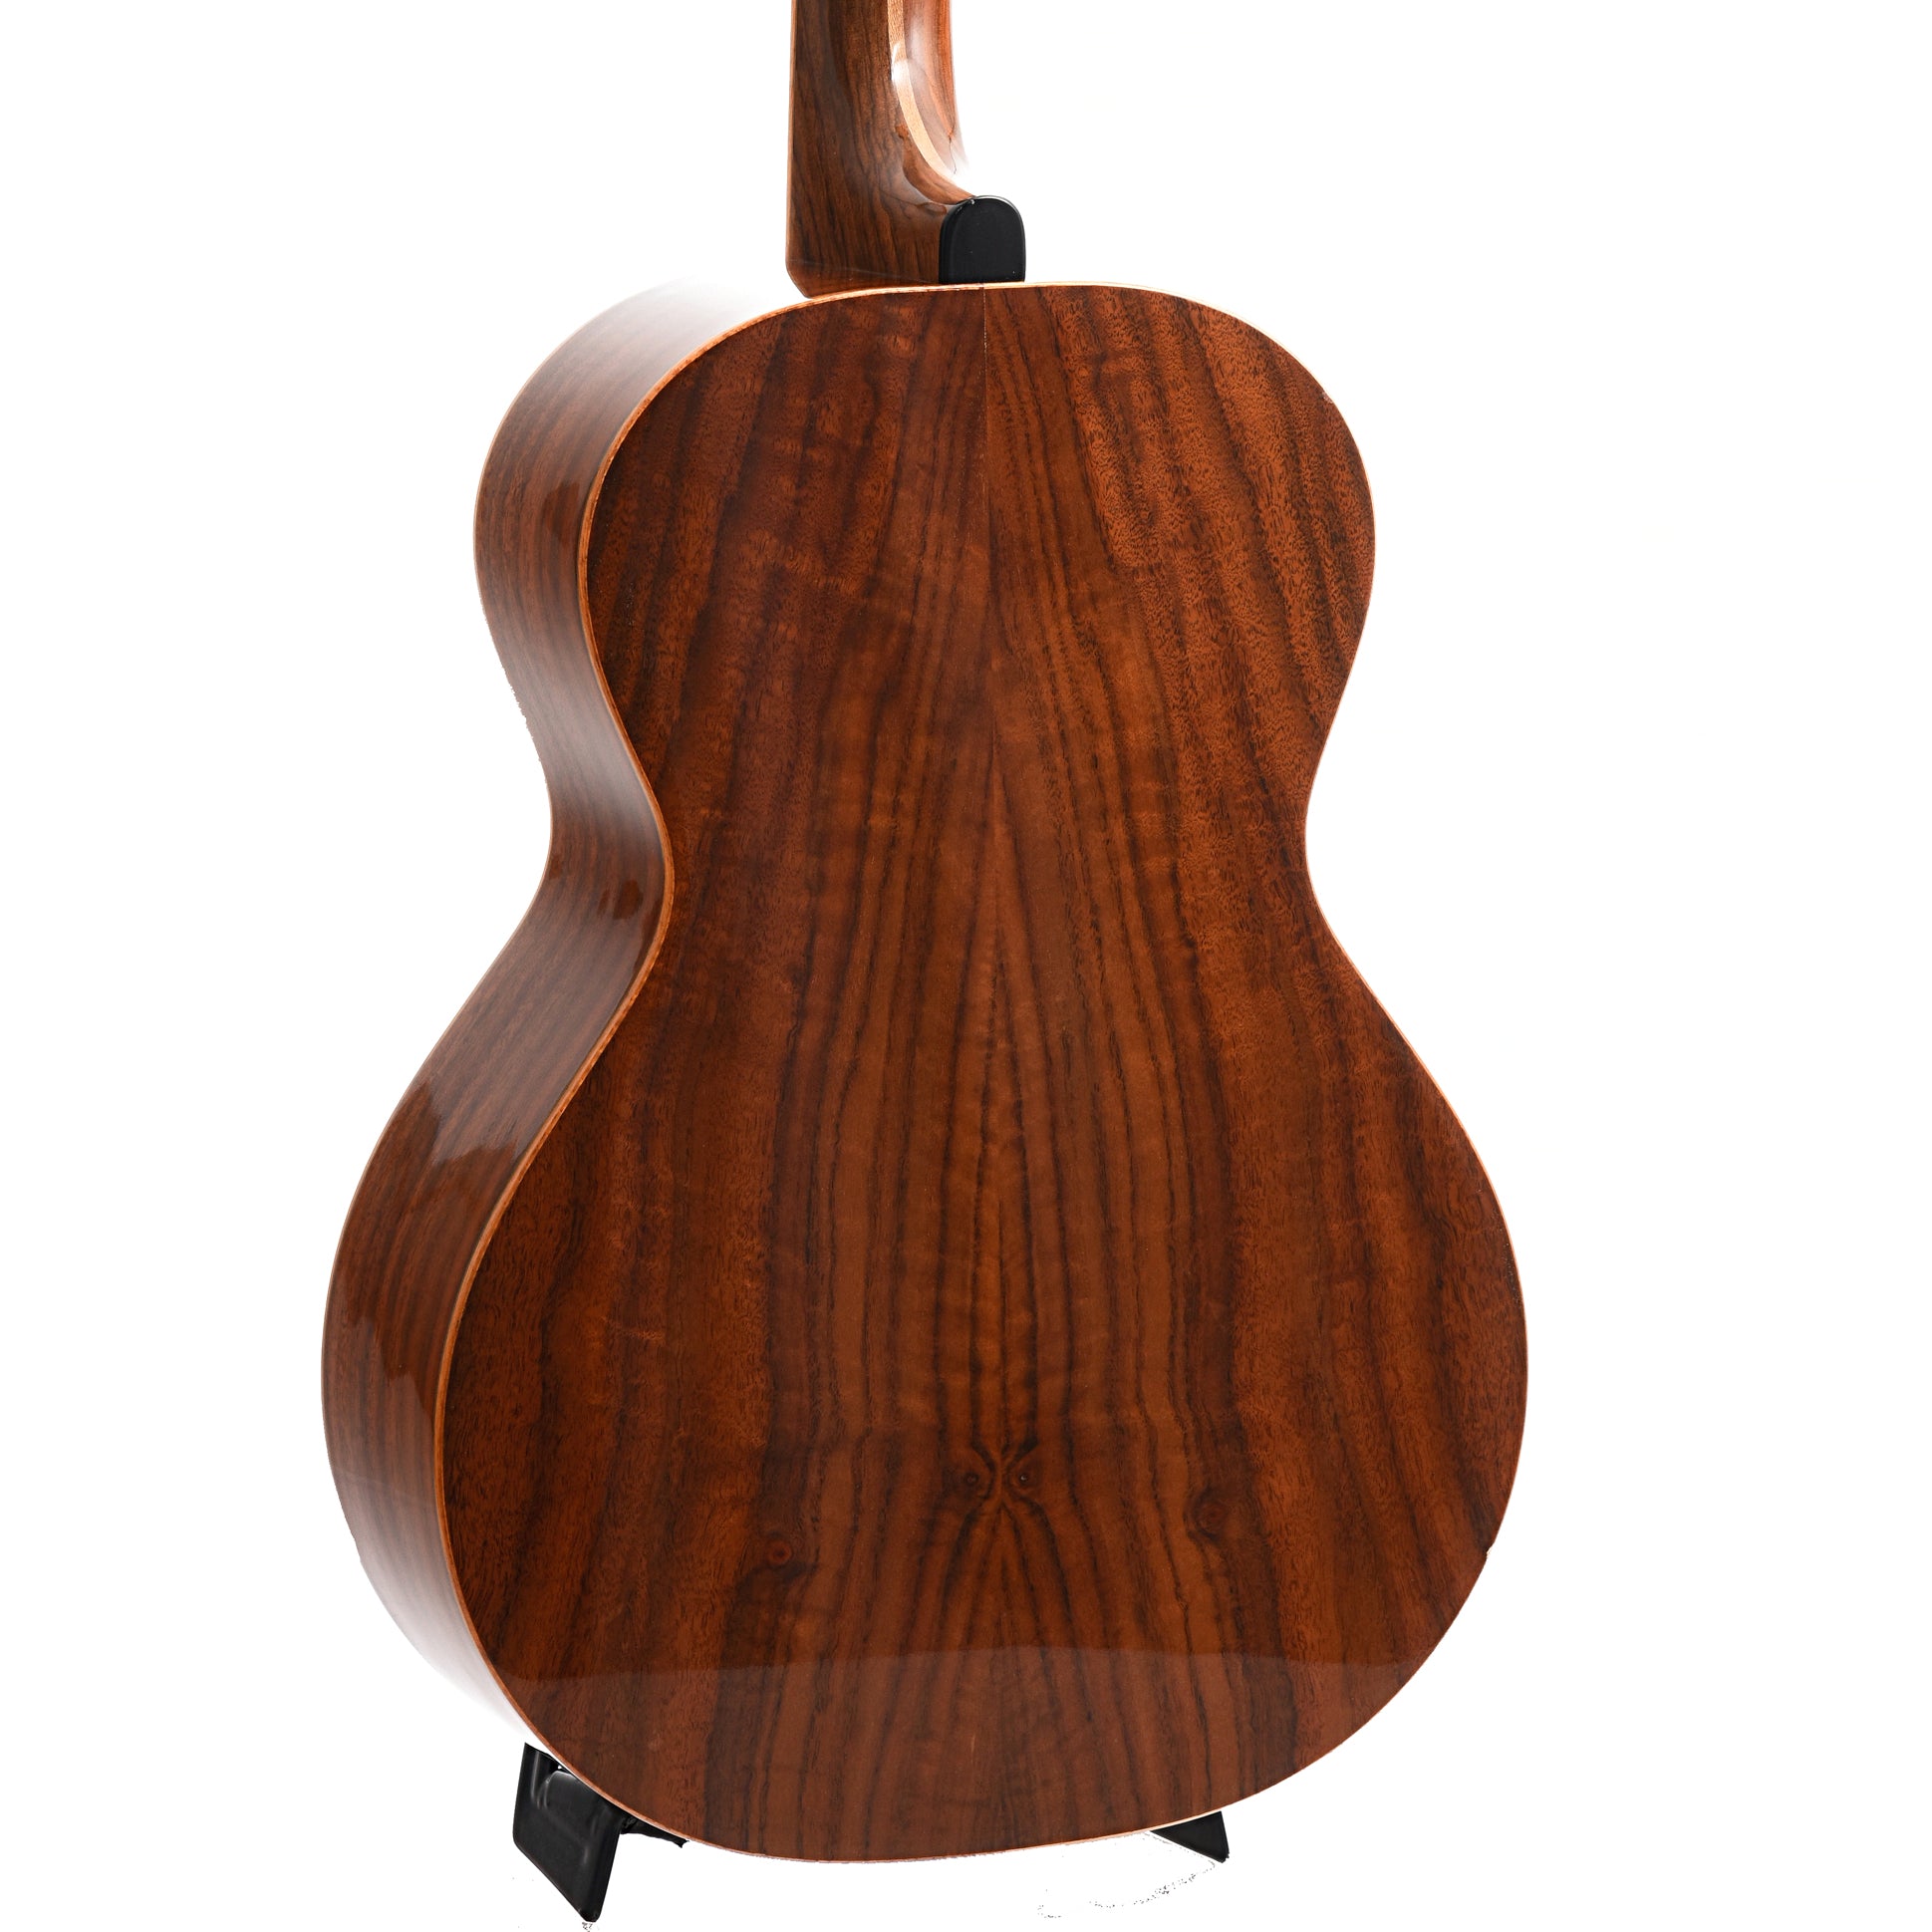 Image 12 of H.G. Leach "Kirby" Model (c.2002) - SKU# 20U-208177 : Product Type Flat-top Guitars : Elderly Instruments